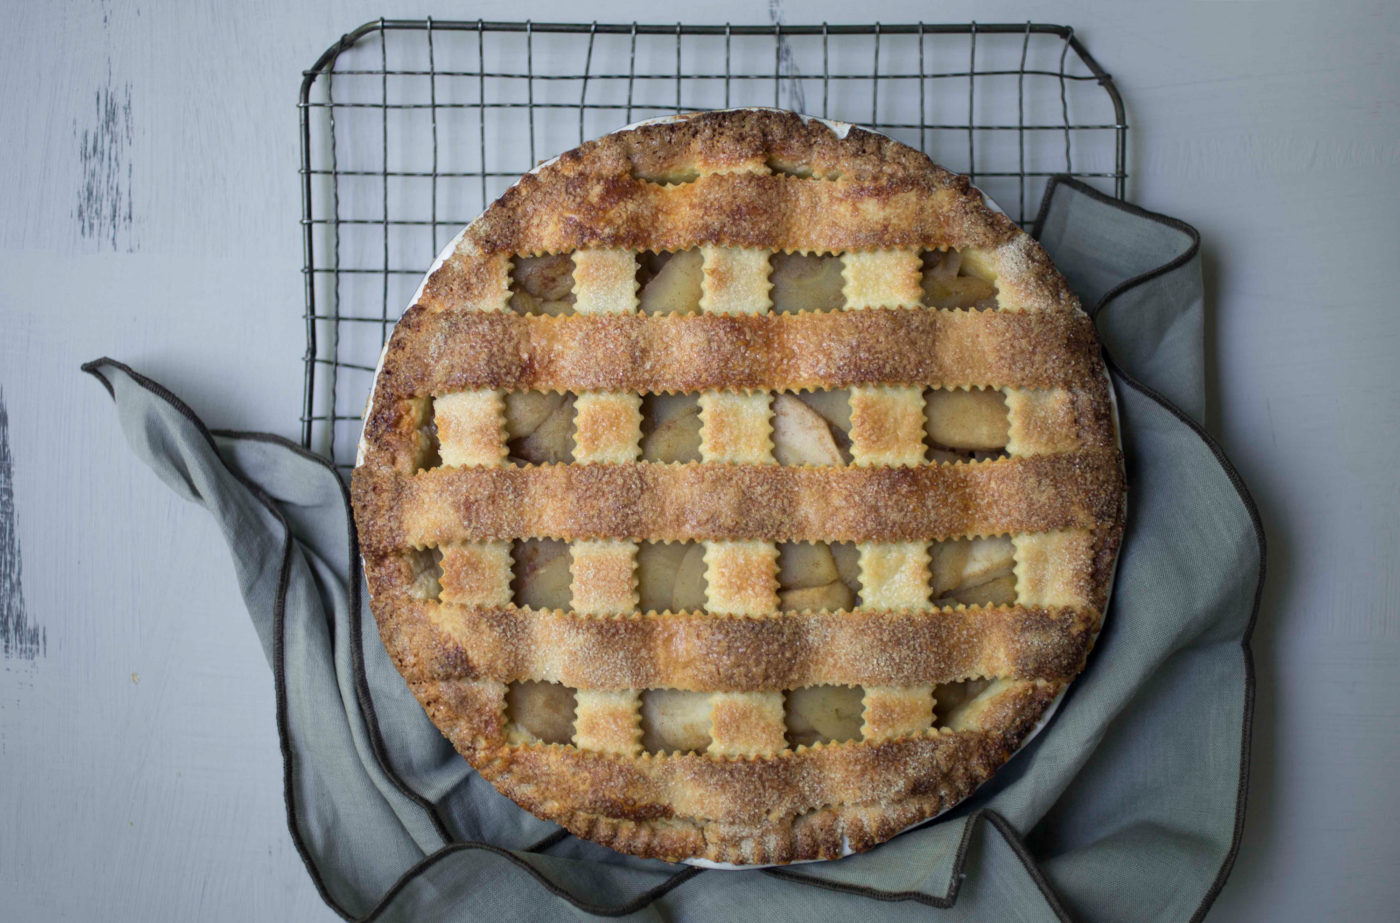 Author and photographer Robyn Lea recreated Pollock's apple pie